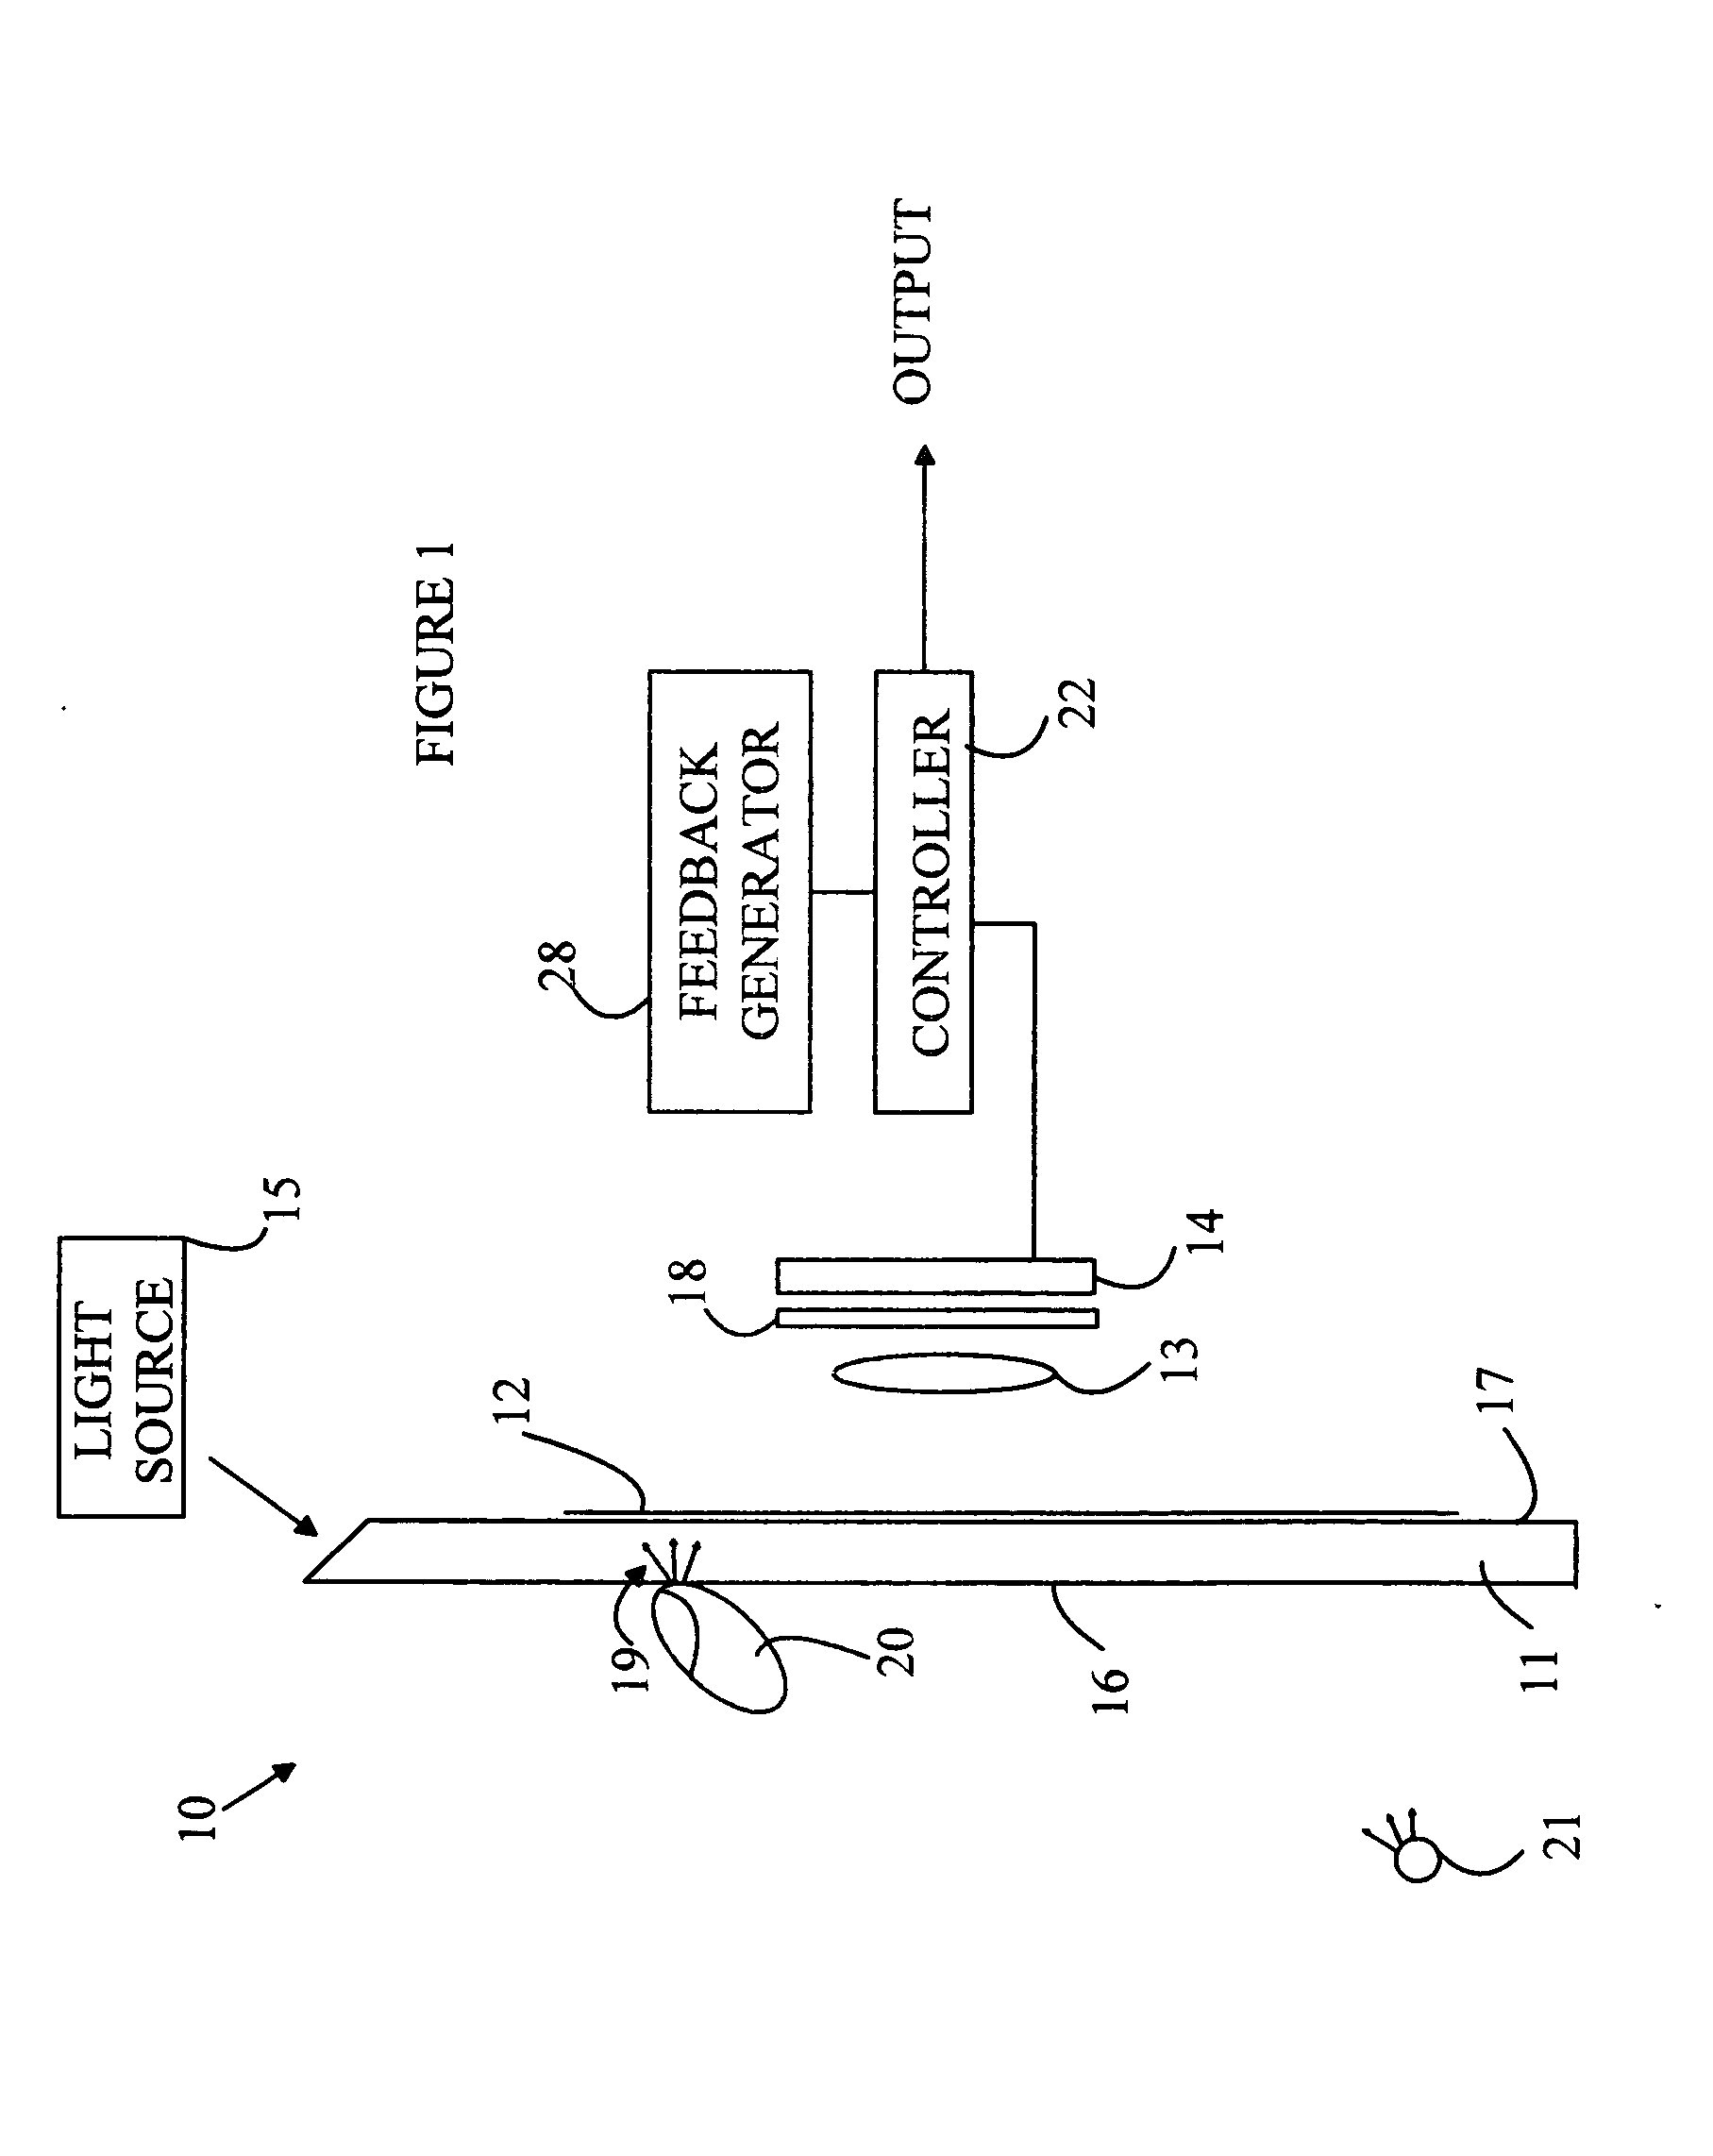 Optical generic switch panel